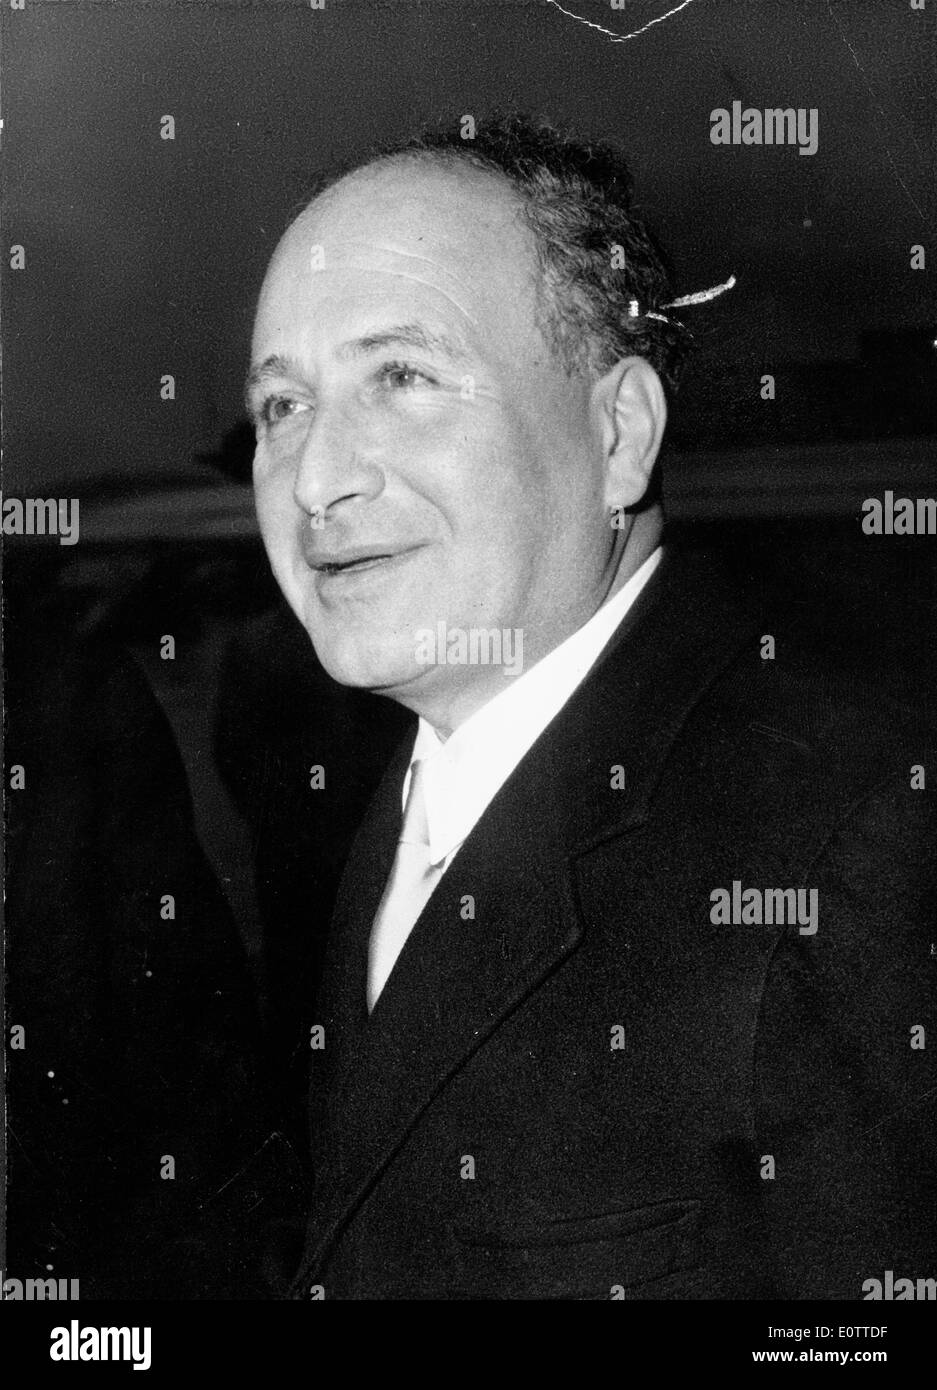 Close-up of politician Walter Eytan smiling Stock Photo